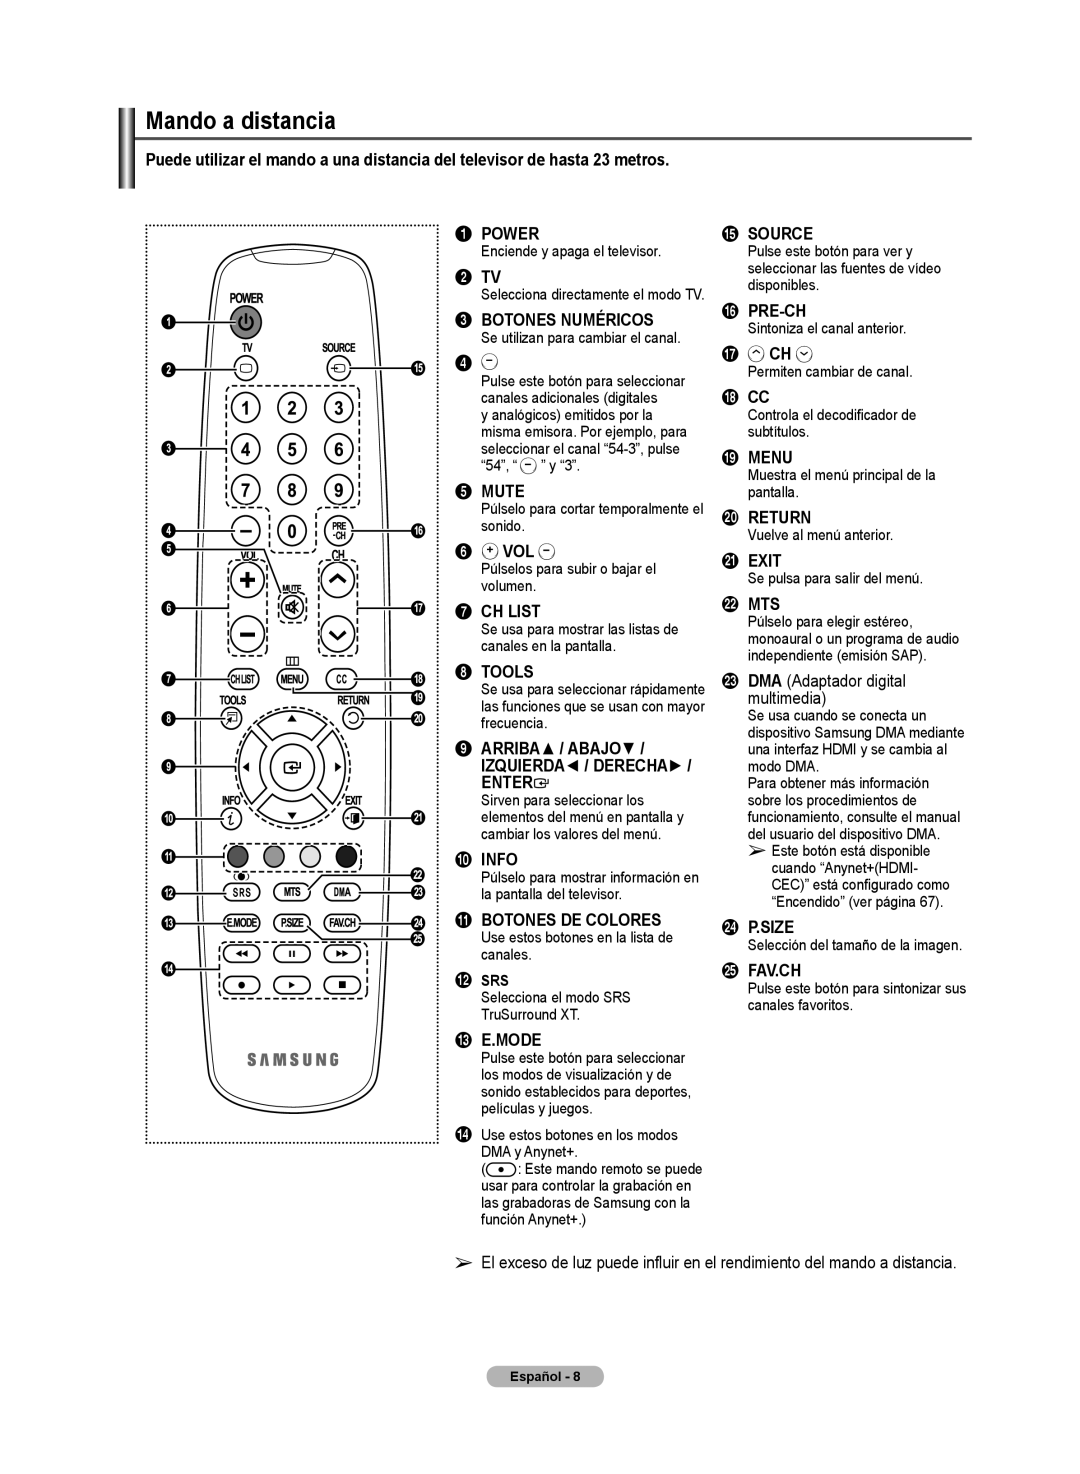 Samsung 510 Power, 2 TV, Botones Numéricos, Mute, Ch List, Tools, Arriba / Abajo, Izquierda / Derecha, Enter, Info, Source 